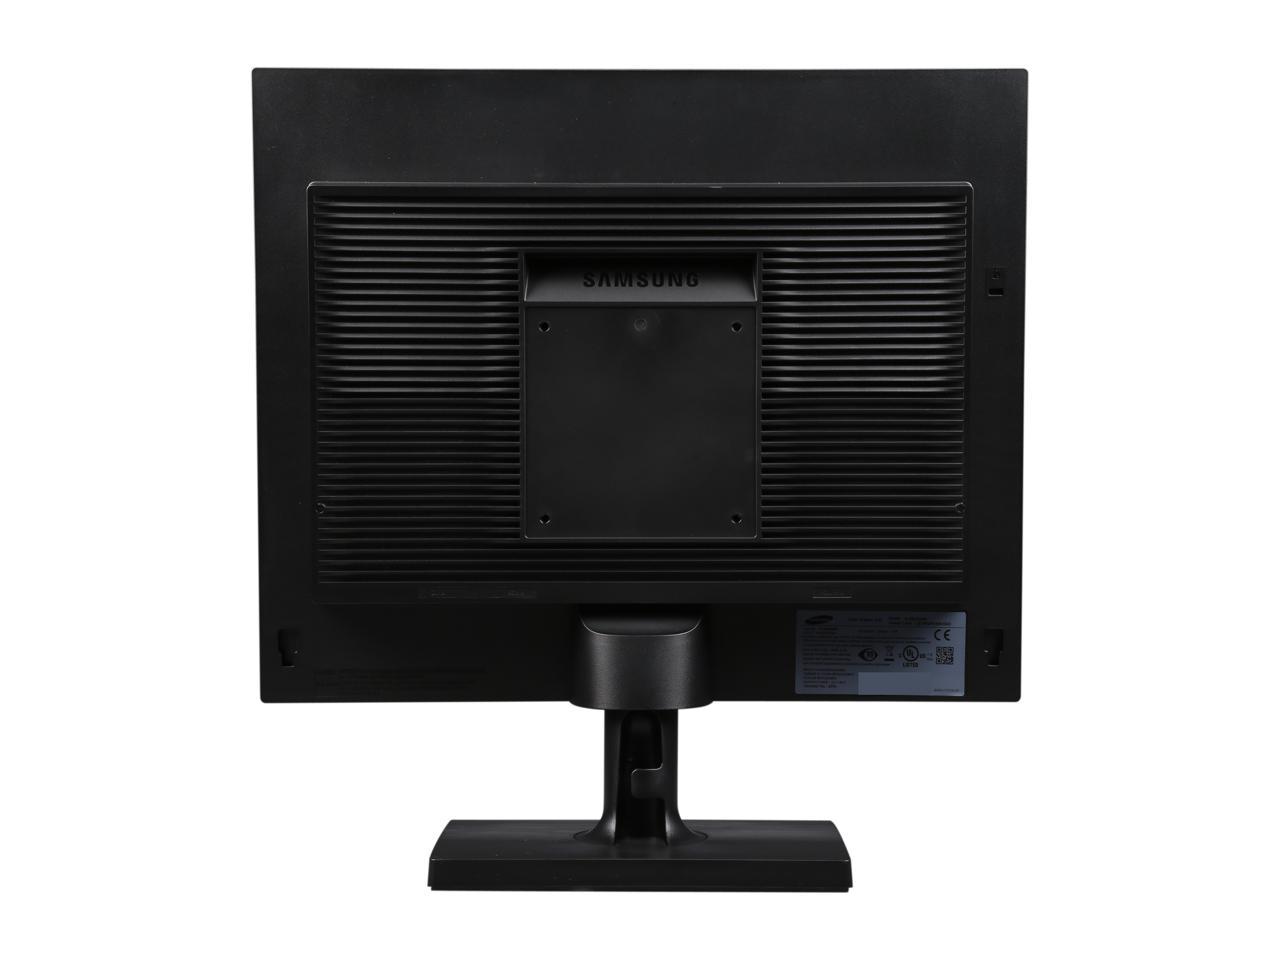 Samsung S19E200BR SE200 Series Black 19" LED Business Monitor, 1280 x 1024, 1000:1, 250cd/m2, VGA&DVI, VESA mountable